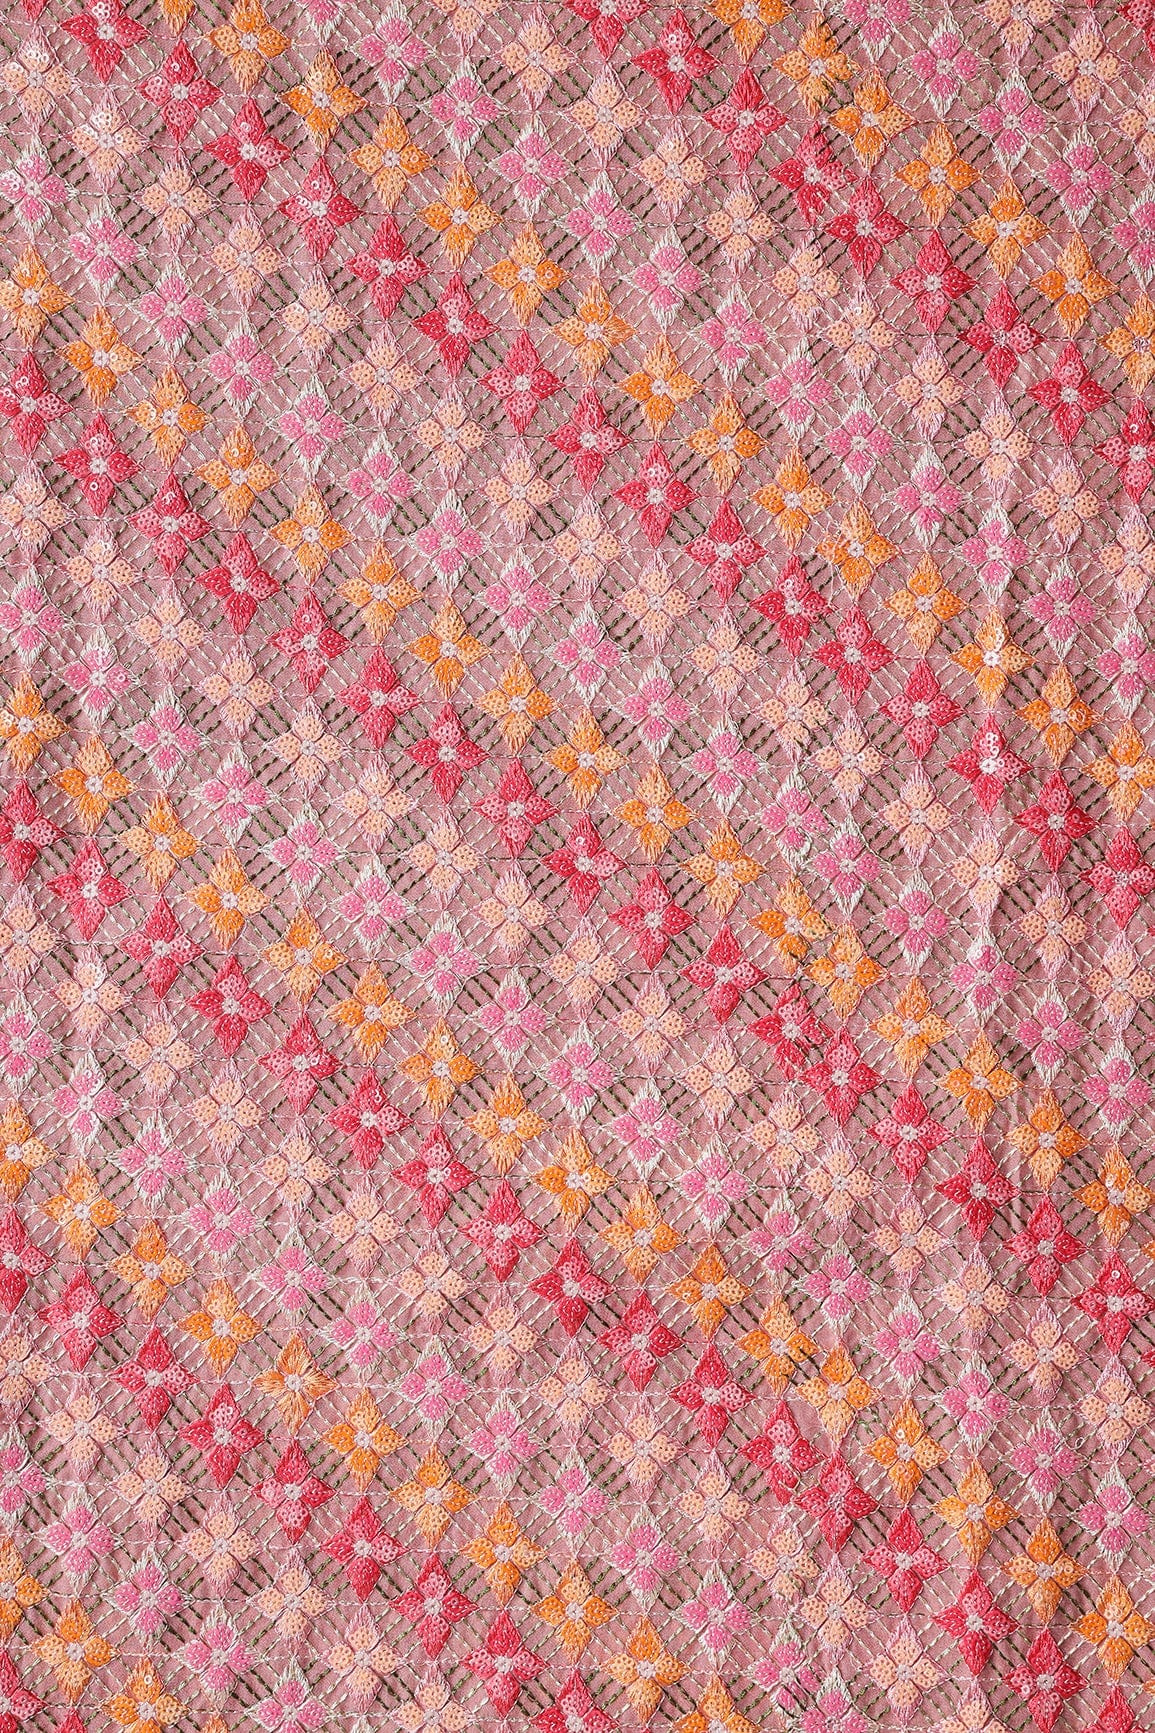 doeraa LEHENGA SET Copy of Cream And Coral Pink Unstitched Lehenga Set Fabric (3 Piece)